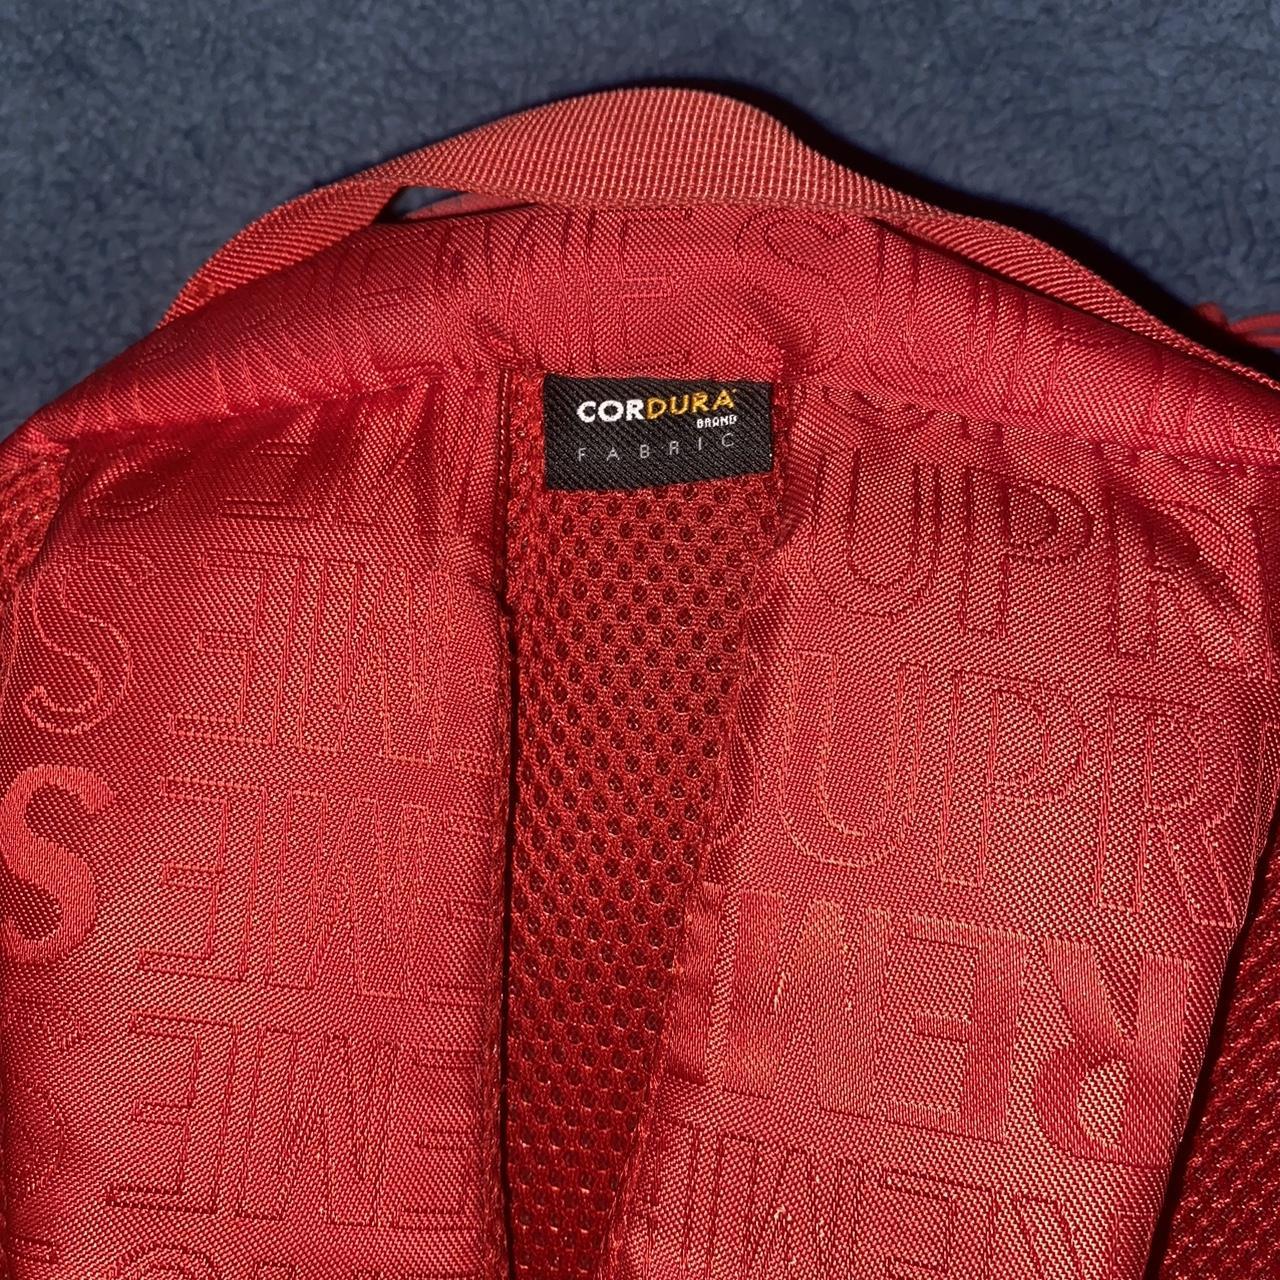 Supreme Dark Red Mesh Backpack. • Authentic • - Depop